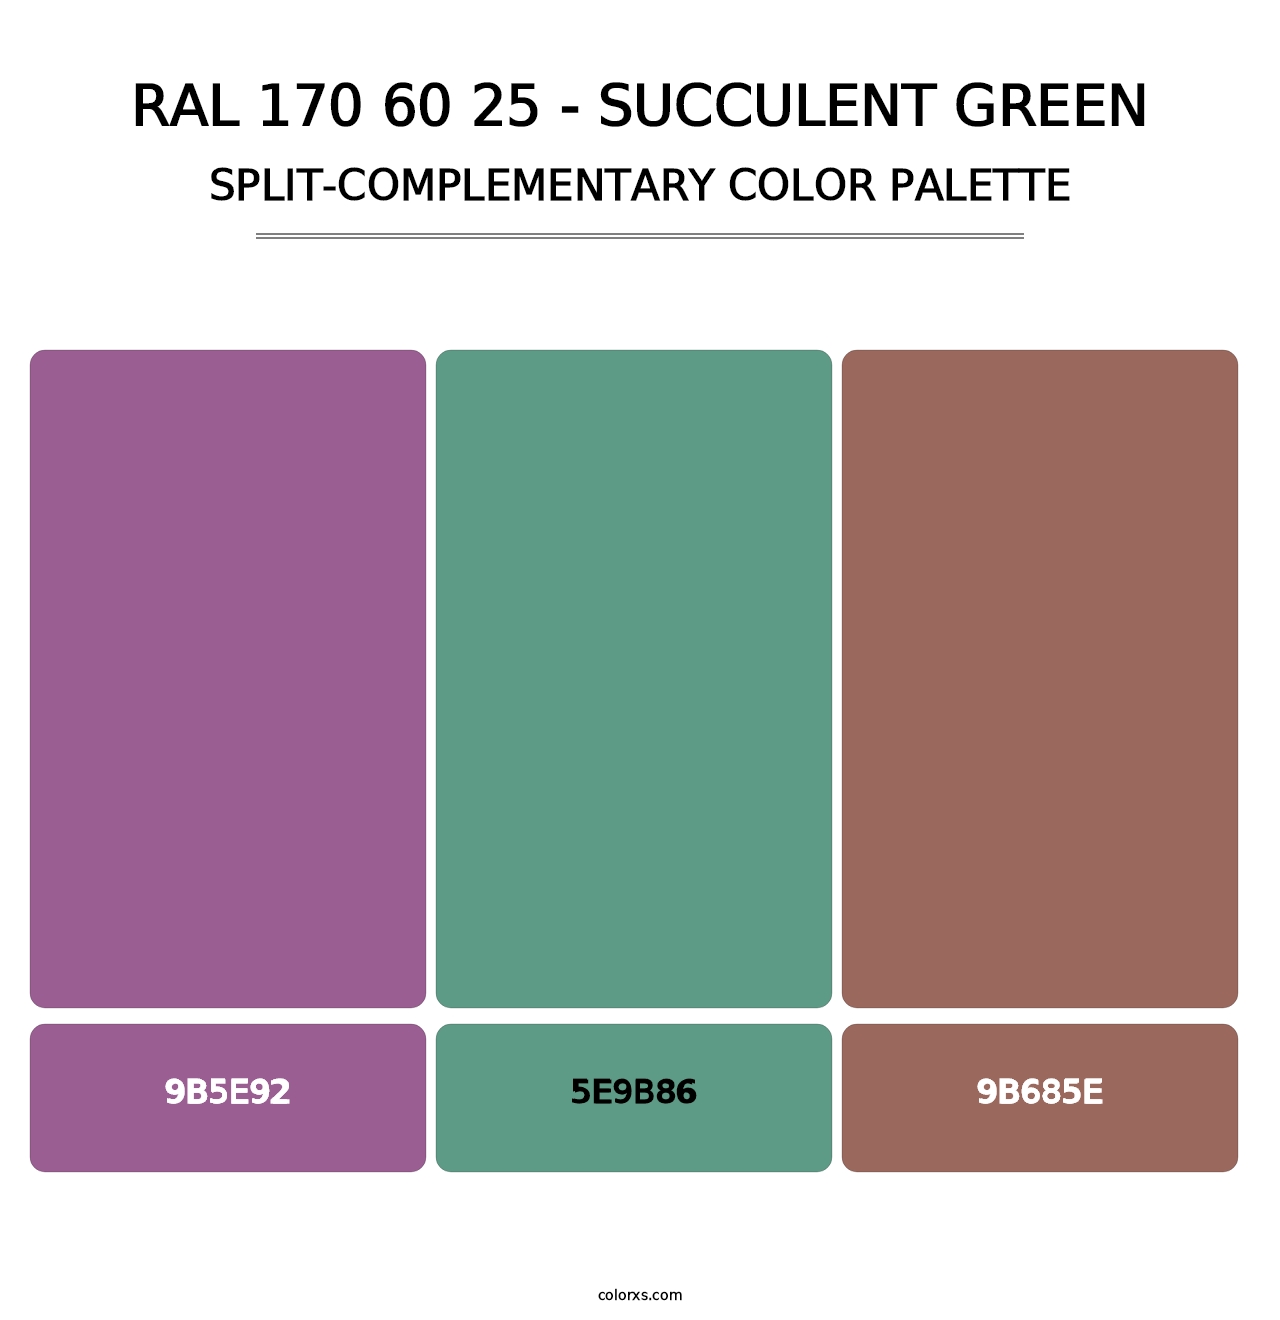 RAL 170 60 25 - Succulent Green - Split-Complementary Color Palette